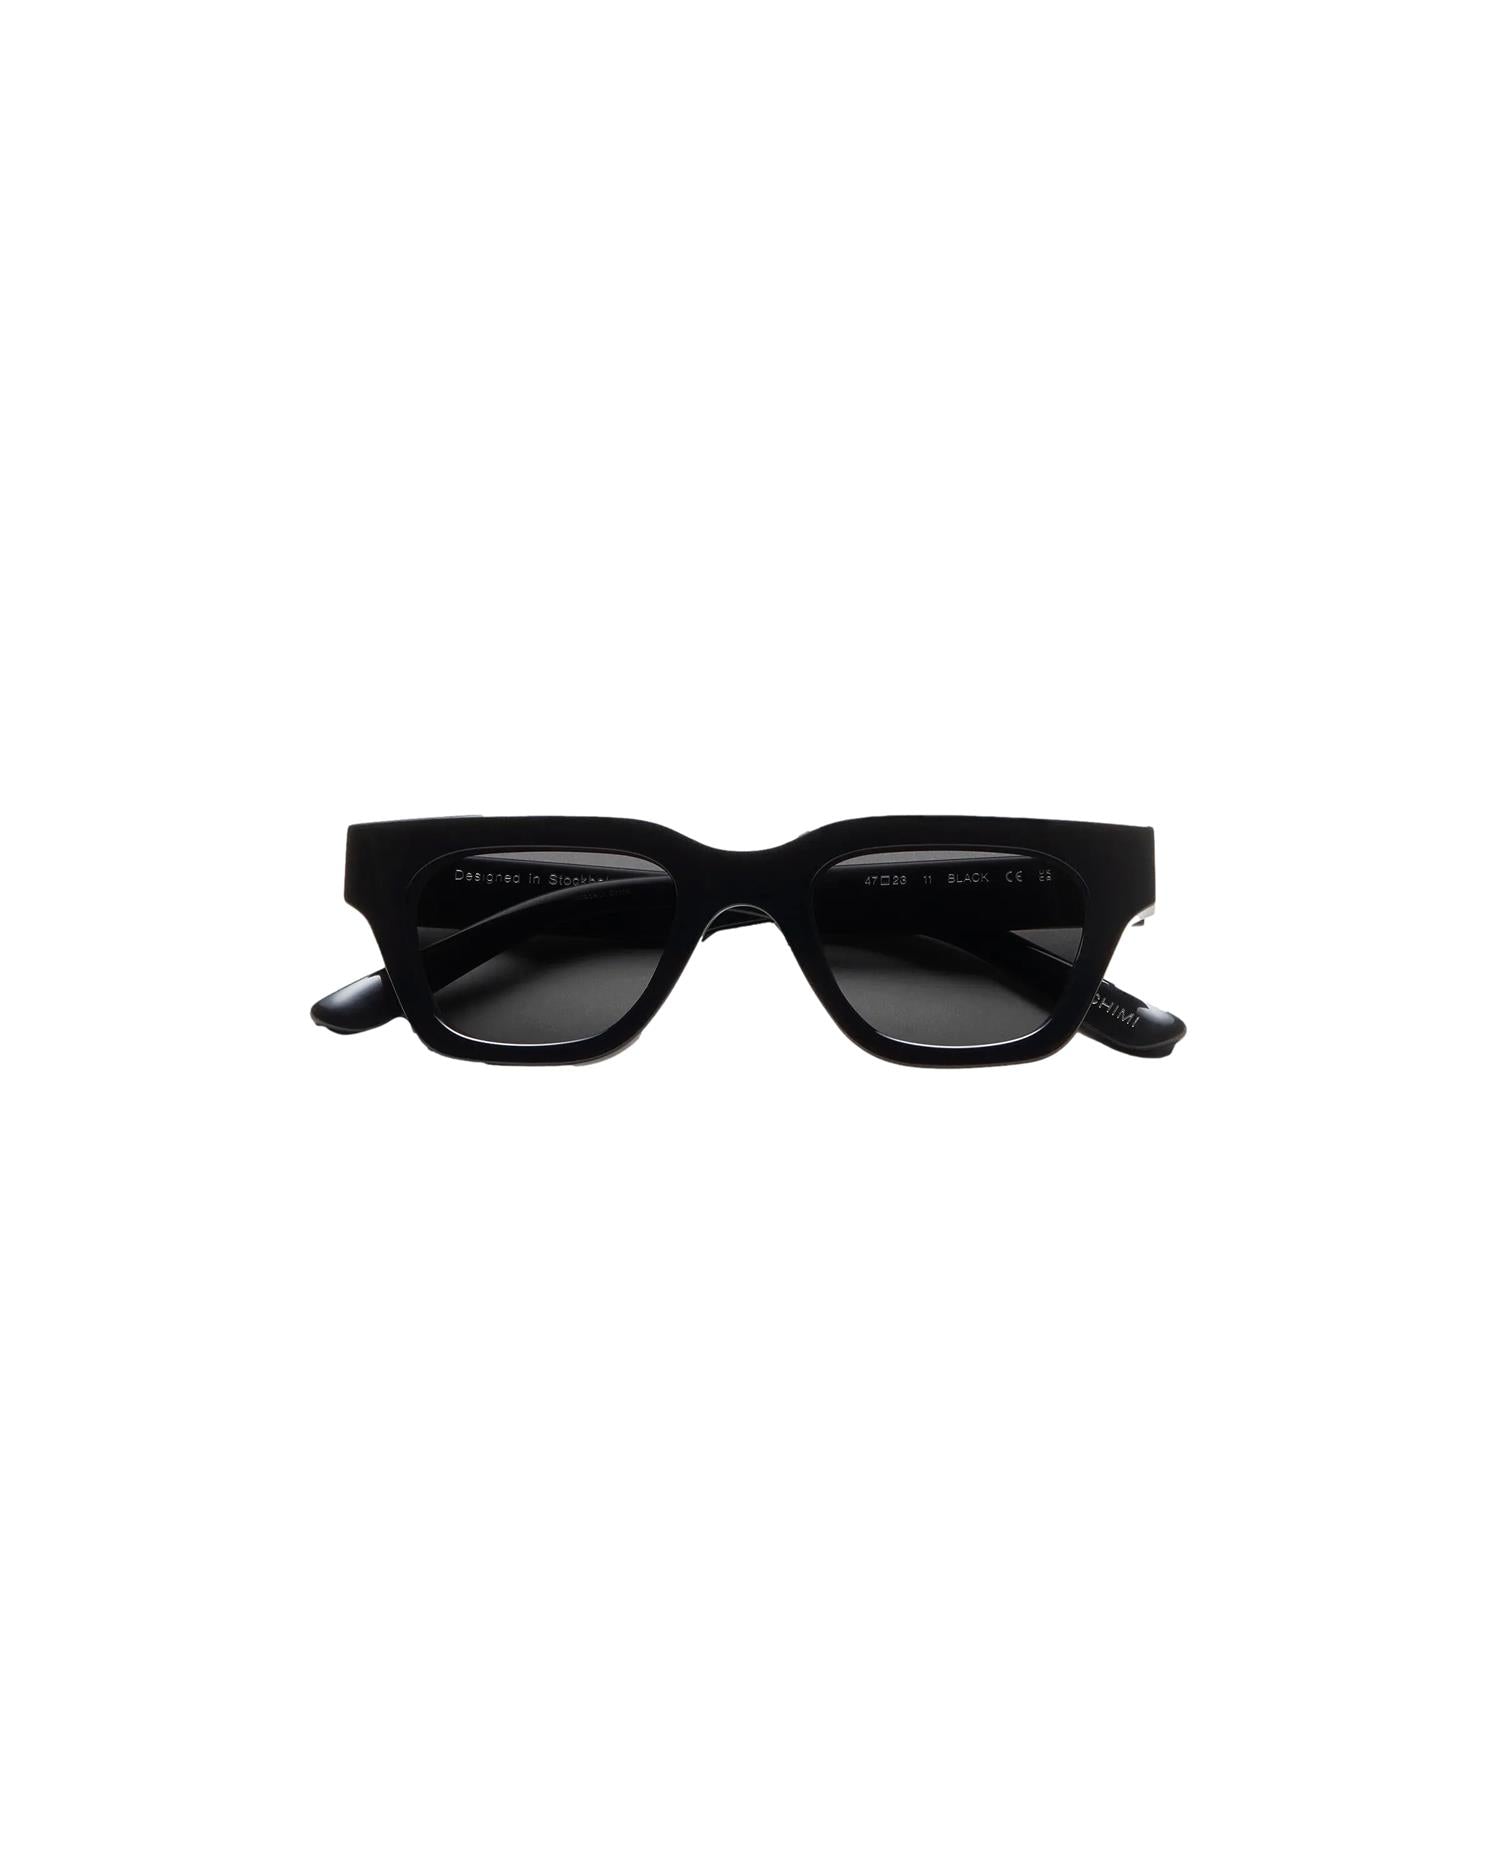 Shop Chimi Eyewear 11 Black Solbriller Sort her - Norsk, rask levering ikkebutikk.no